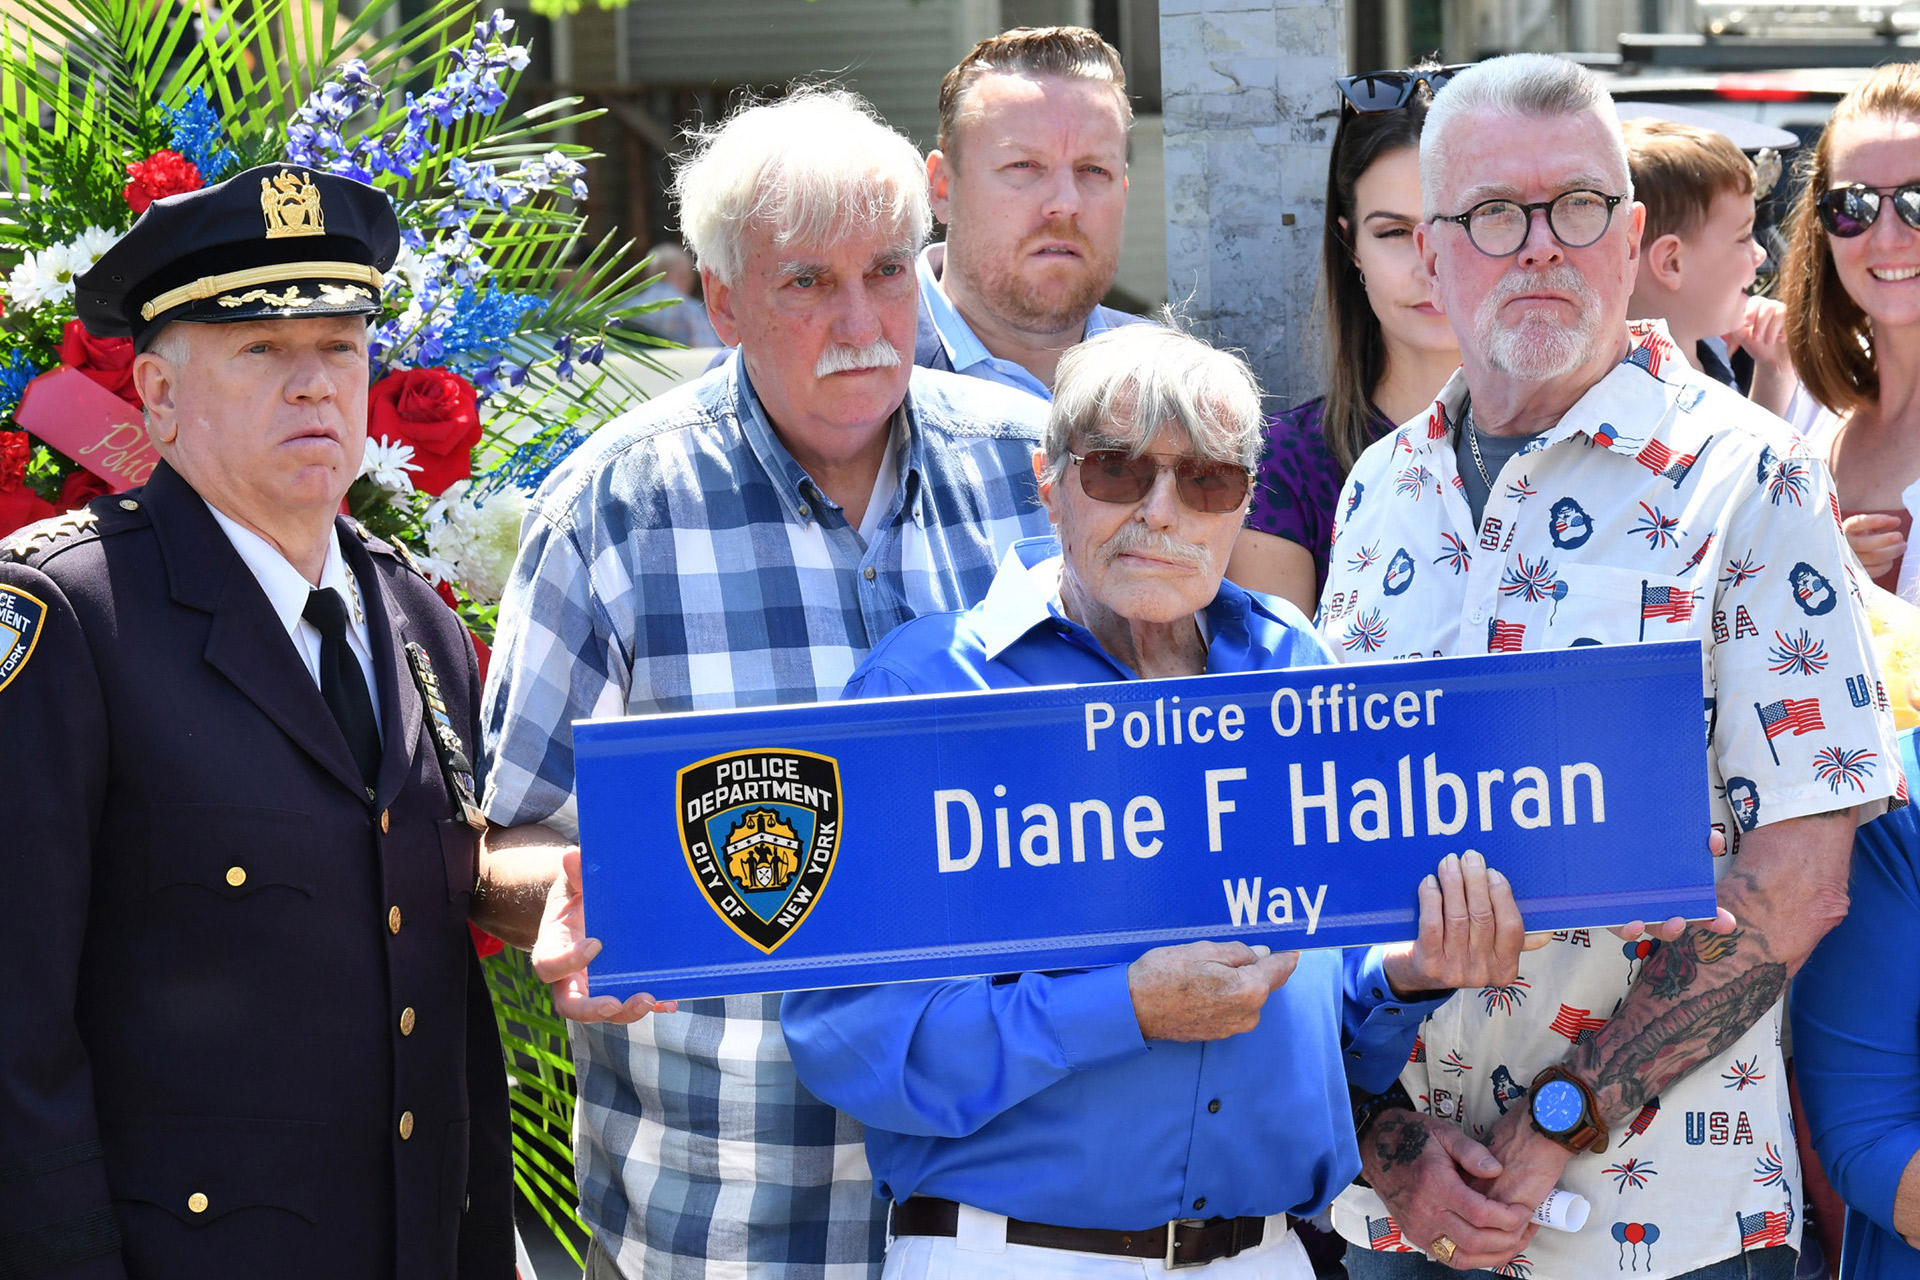 diane-halbran-street-renaming-2-dianes-father-93-year-old-arthur-halbran-holding-the-new-street-sign